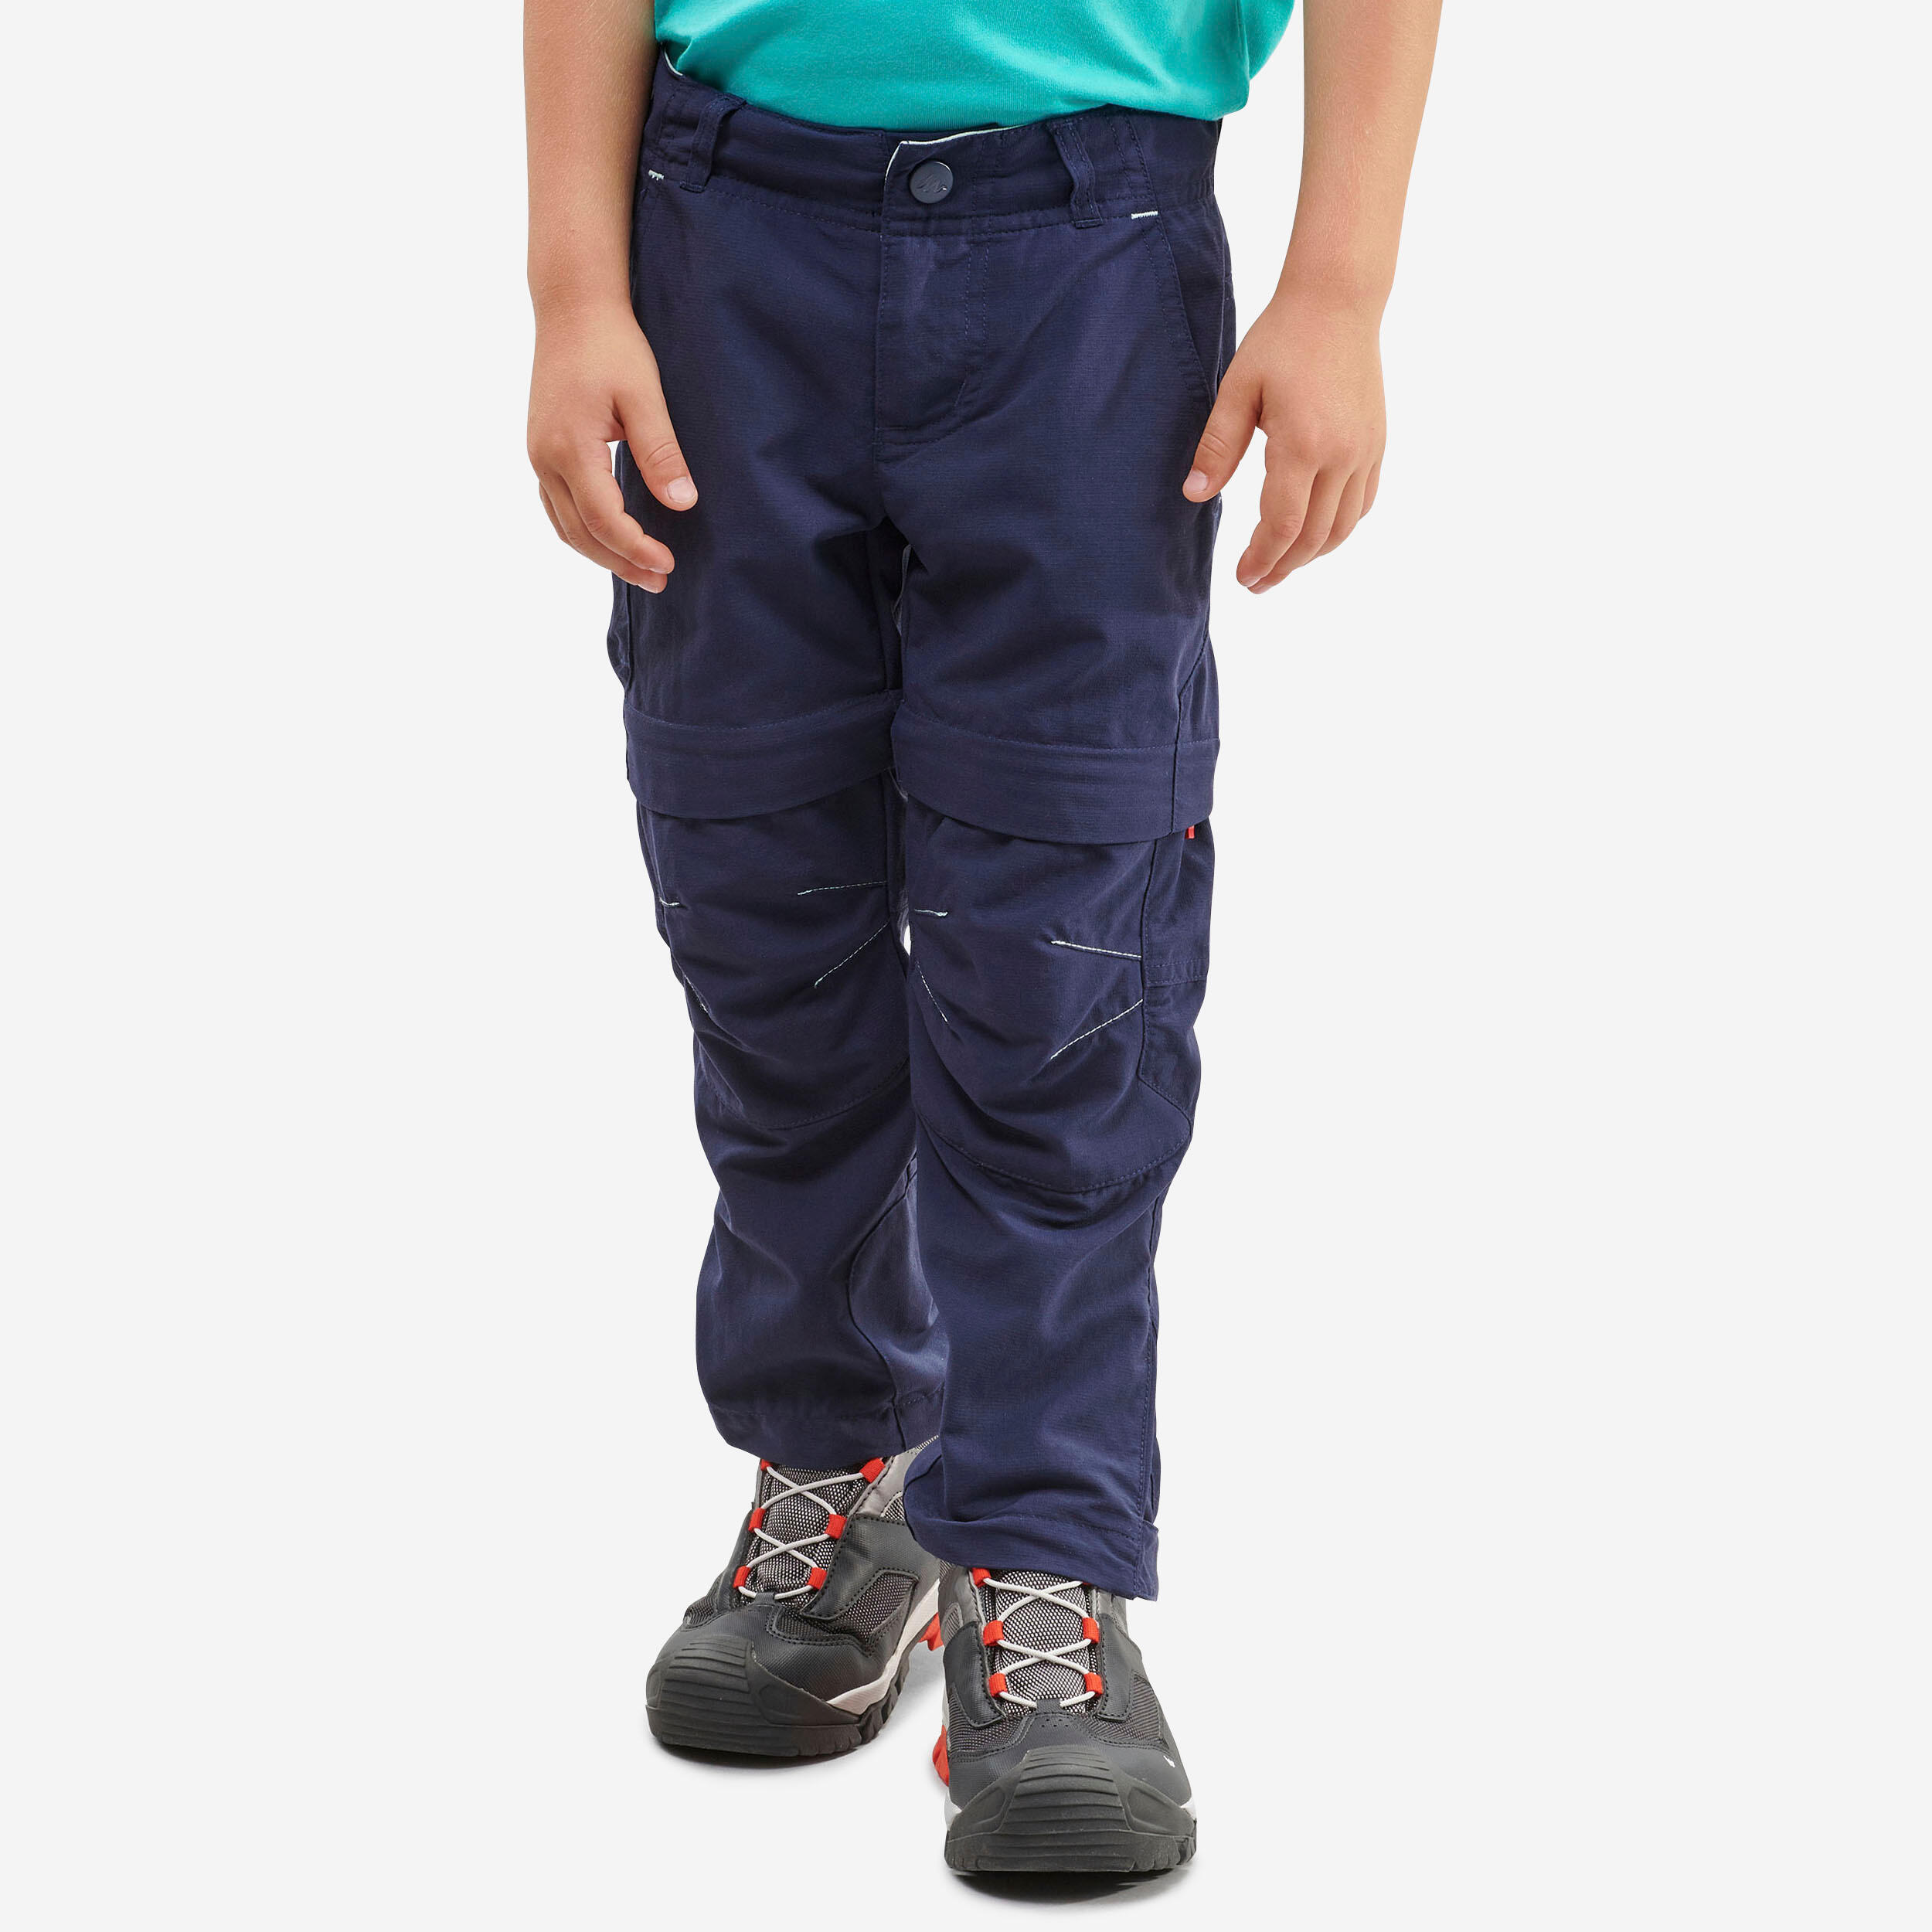 Children's Modular hiking trousers - MH500 KID blue - 2-6 years 1/10